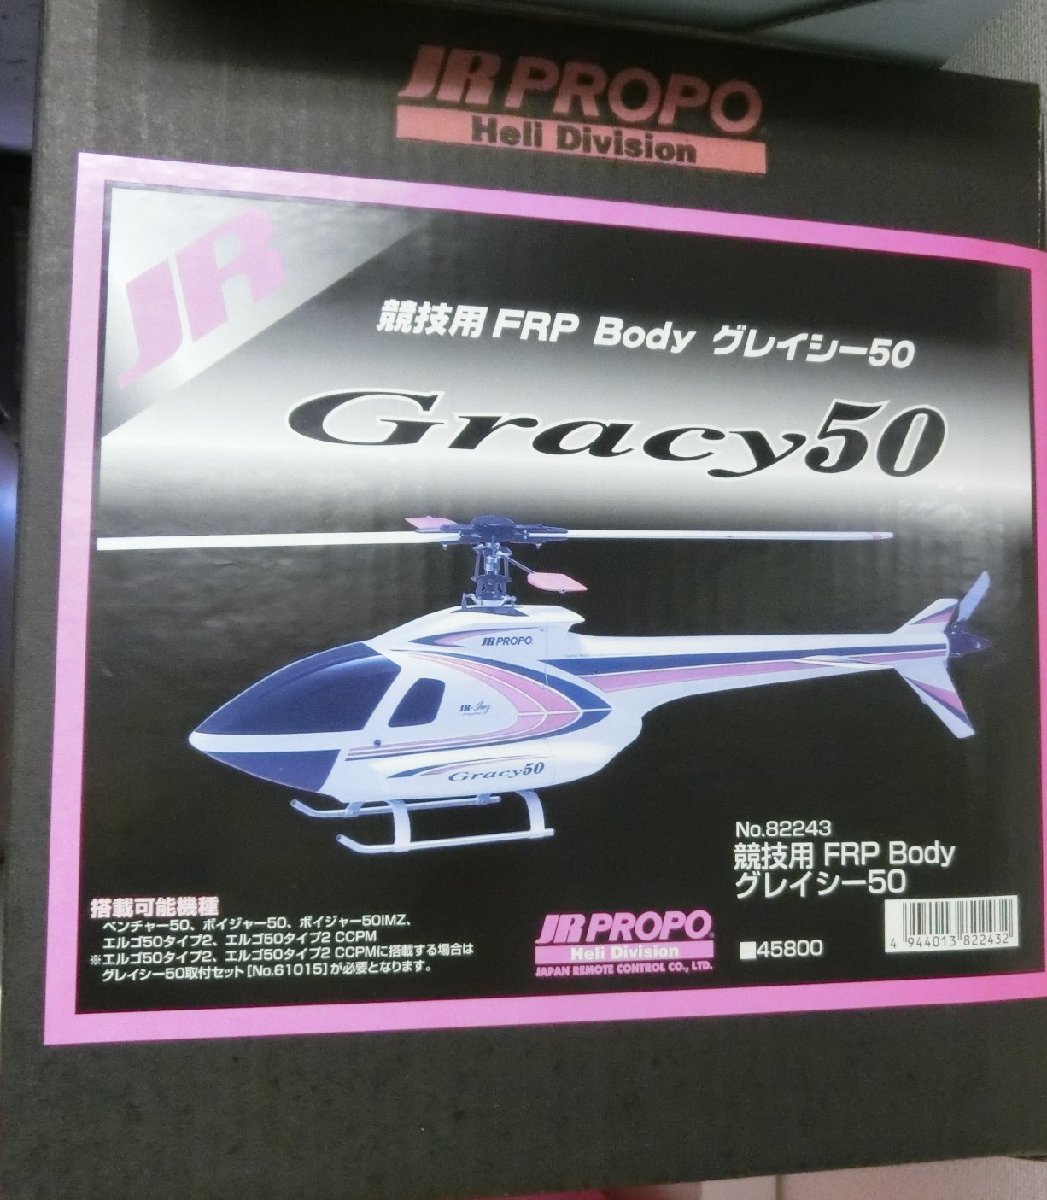 JR PROPO No.82243 競技用 FRP Body グレイシー50